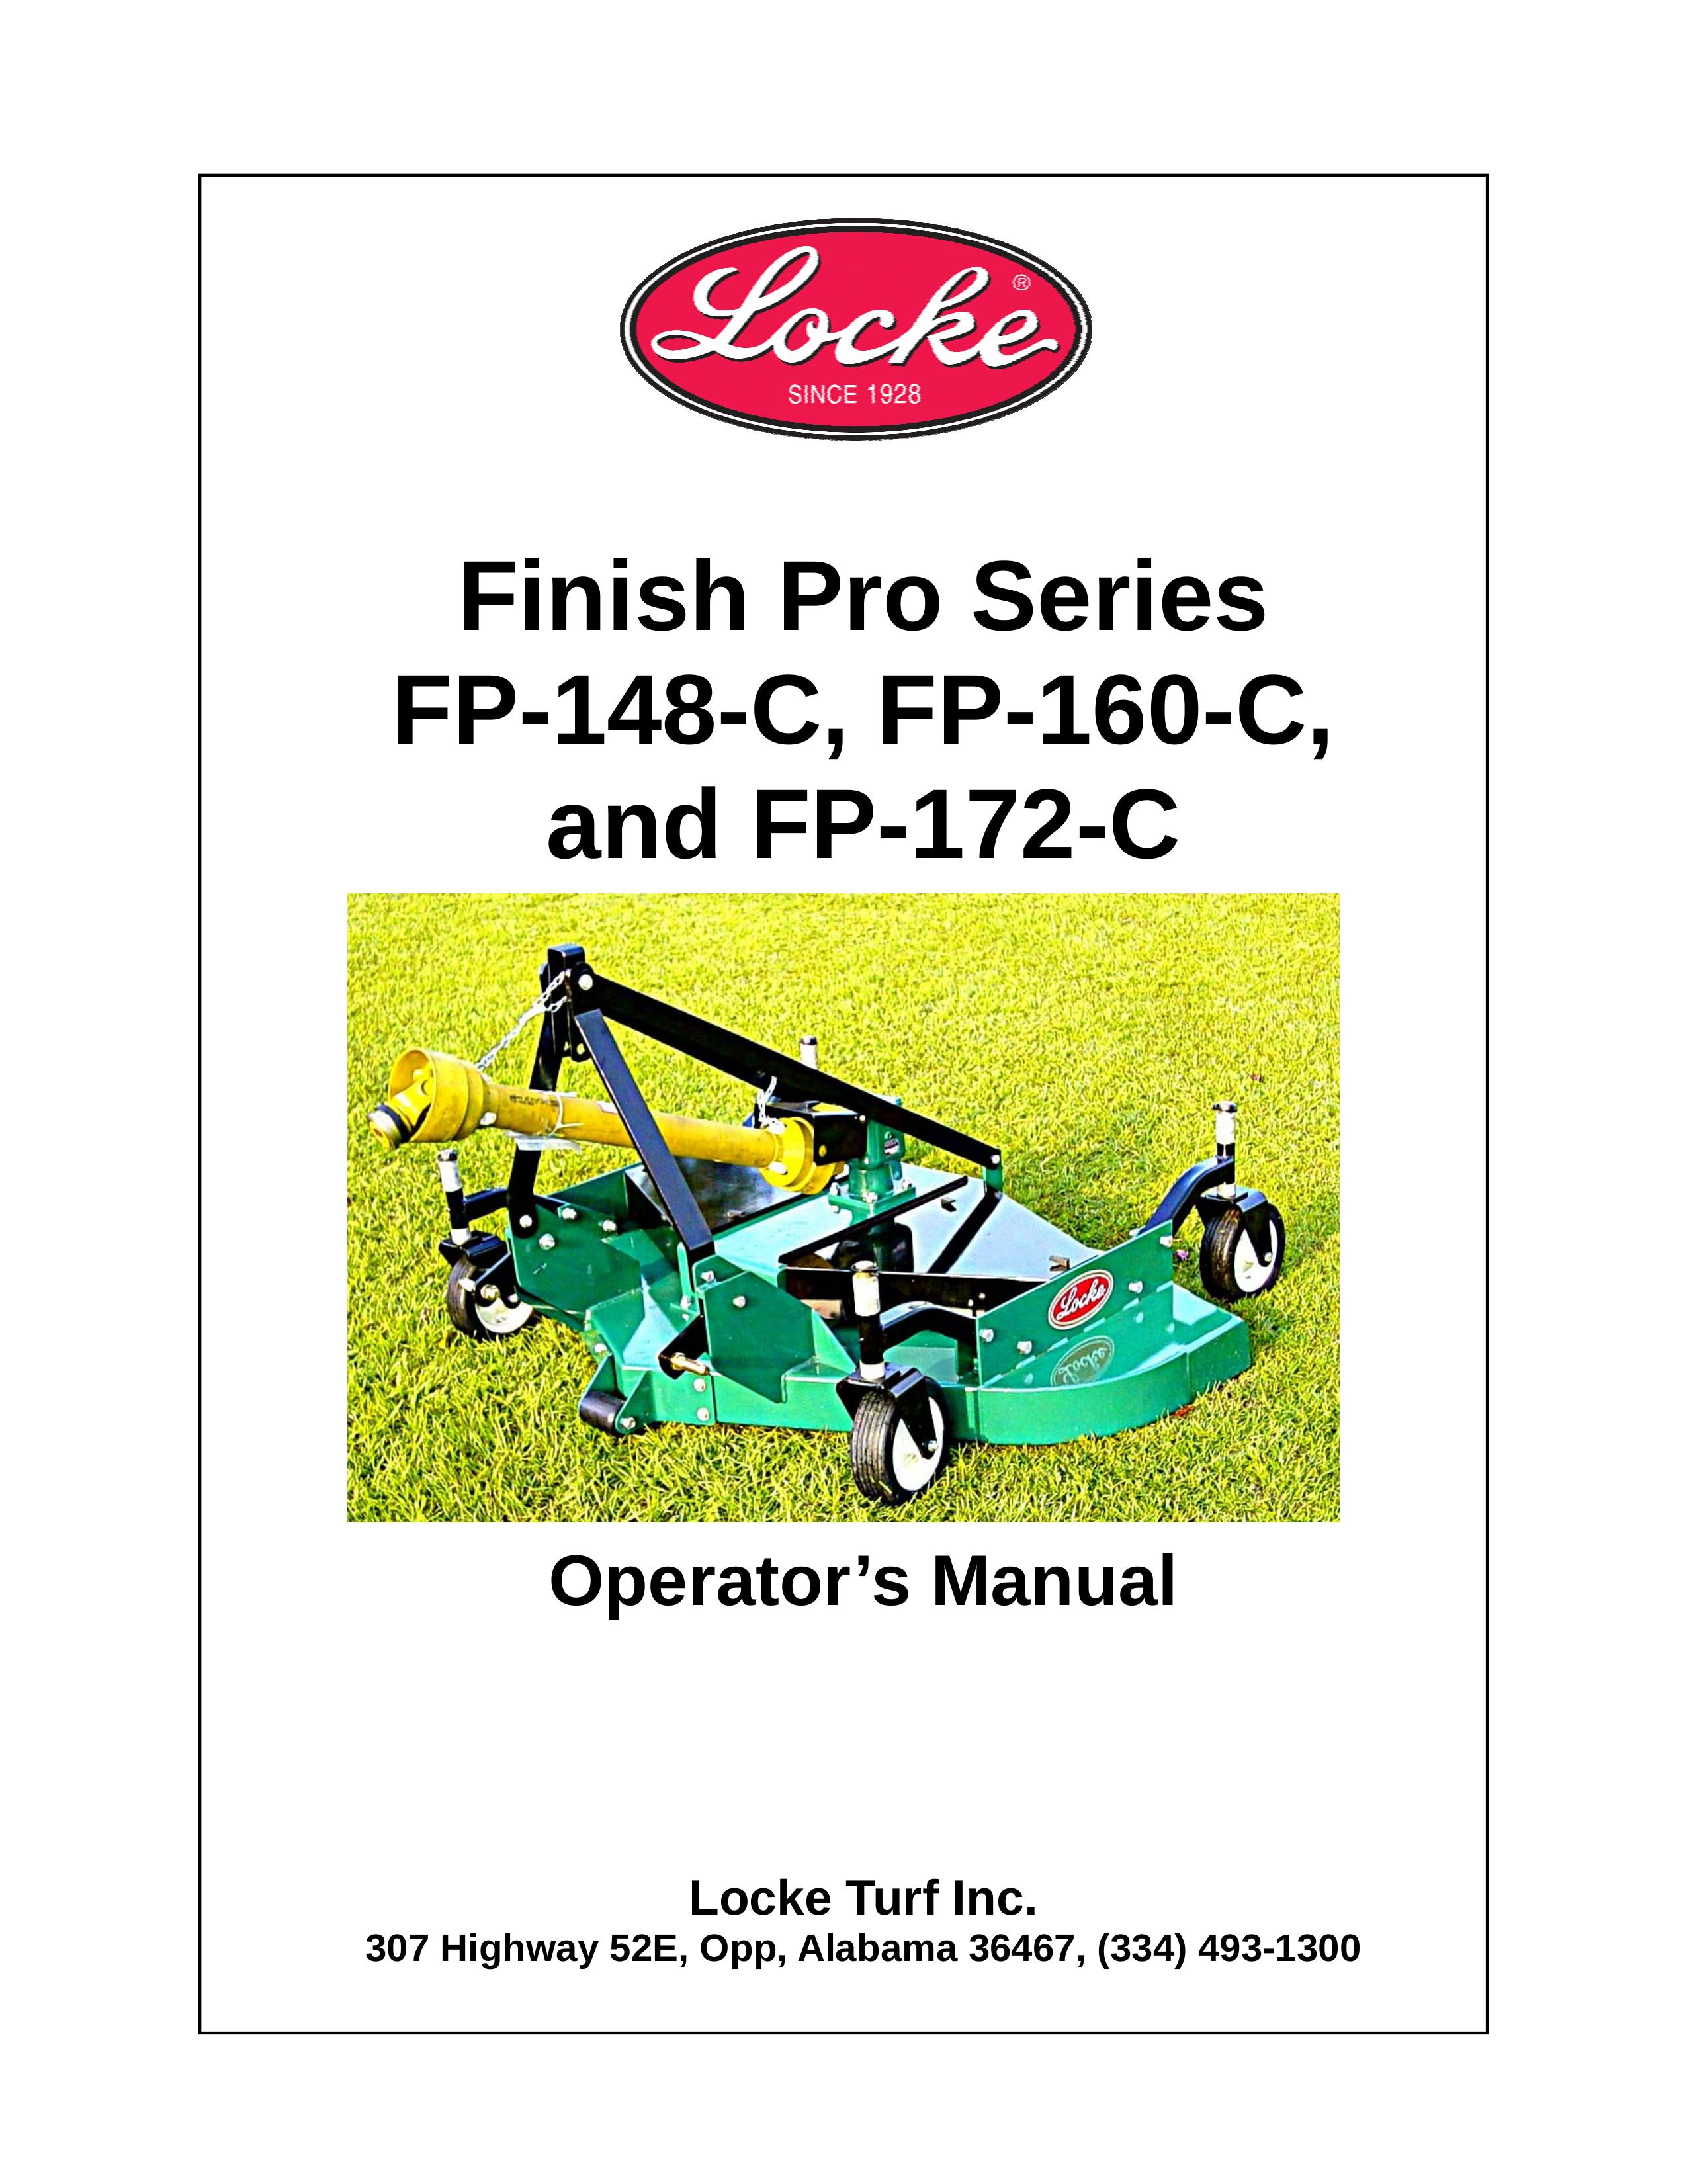 Locke FP-160-C Lawn Mower User Manual